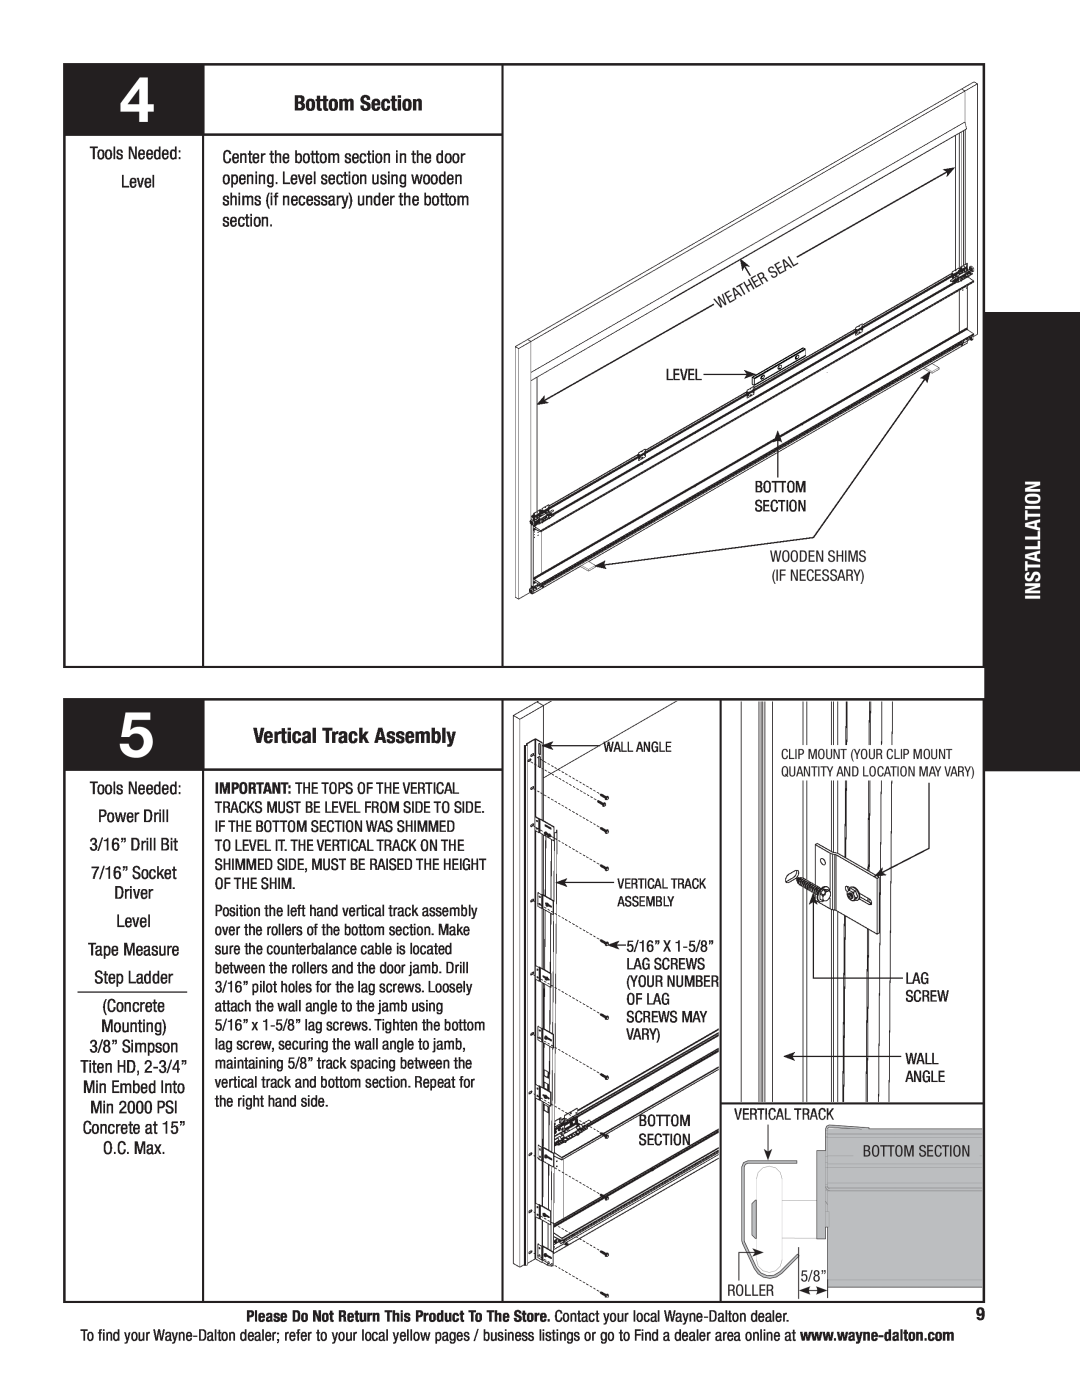 Wayne-Dalton 9800 installation instructions Bottom Section, Vertical Track Assembly, Installation 